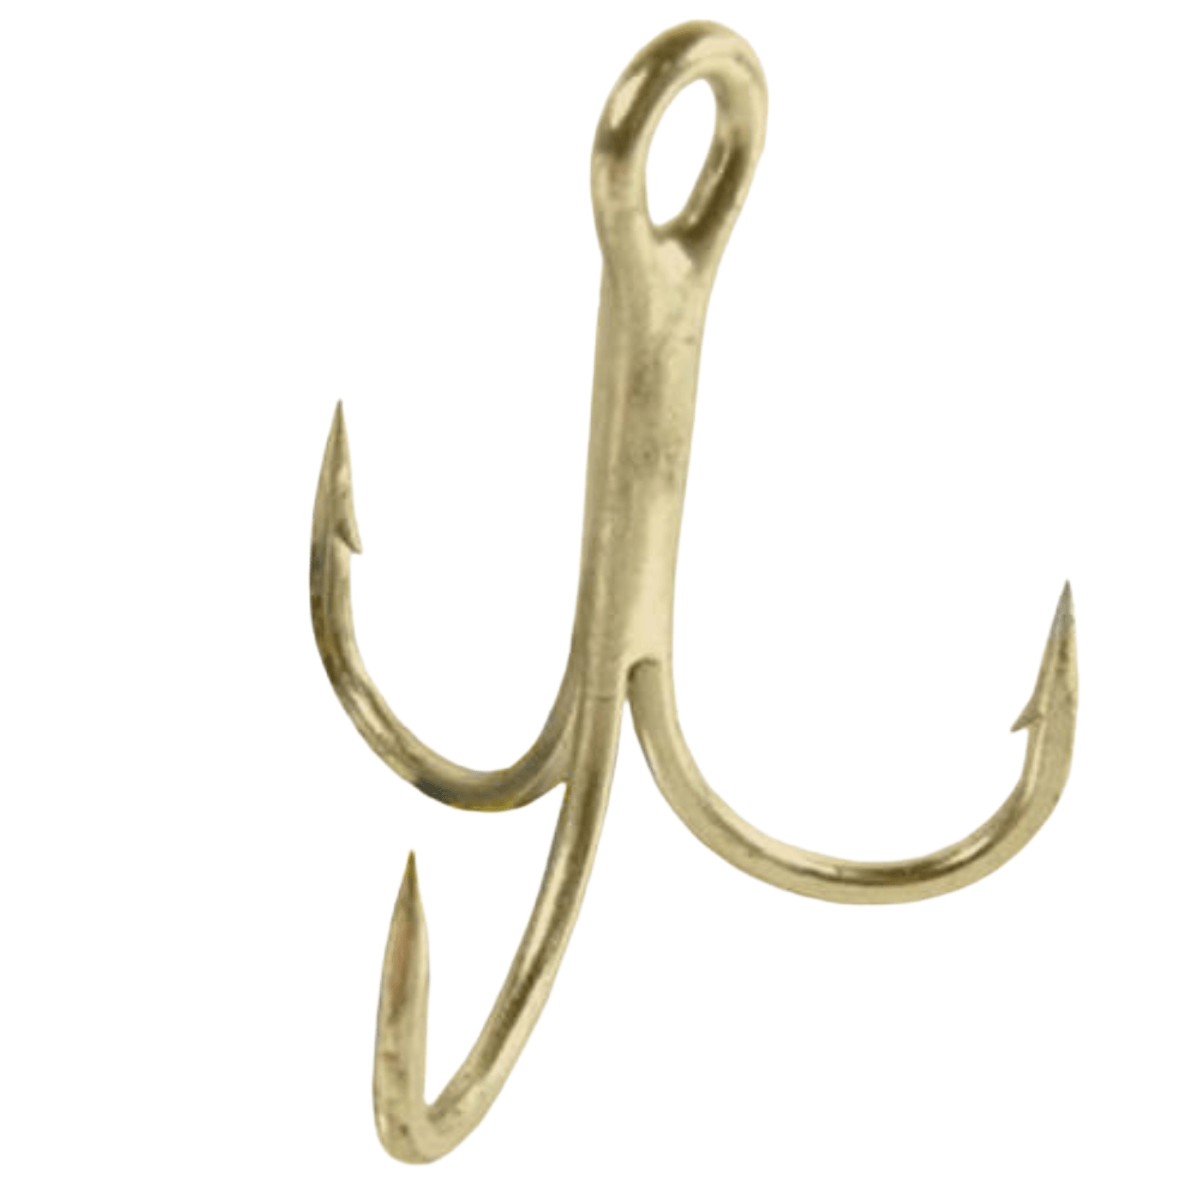 Gamakatsu Round Bend Treble Hook, 1 / Bronze